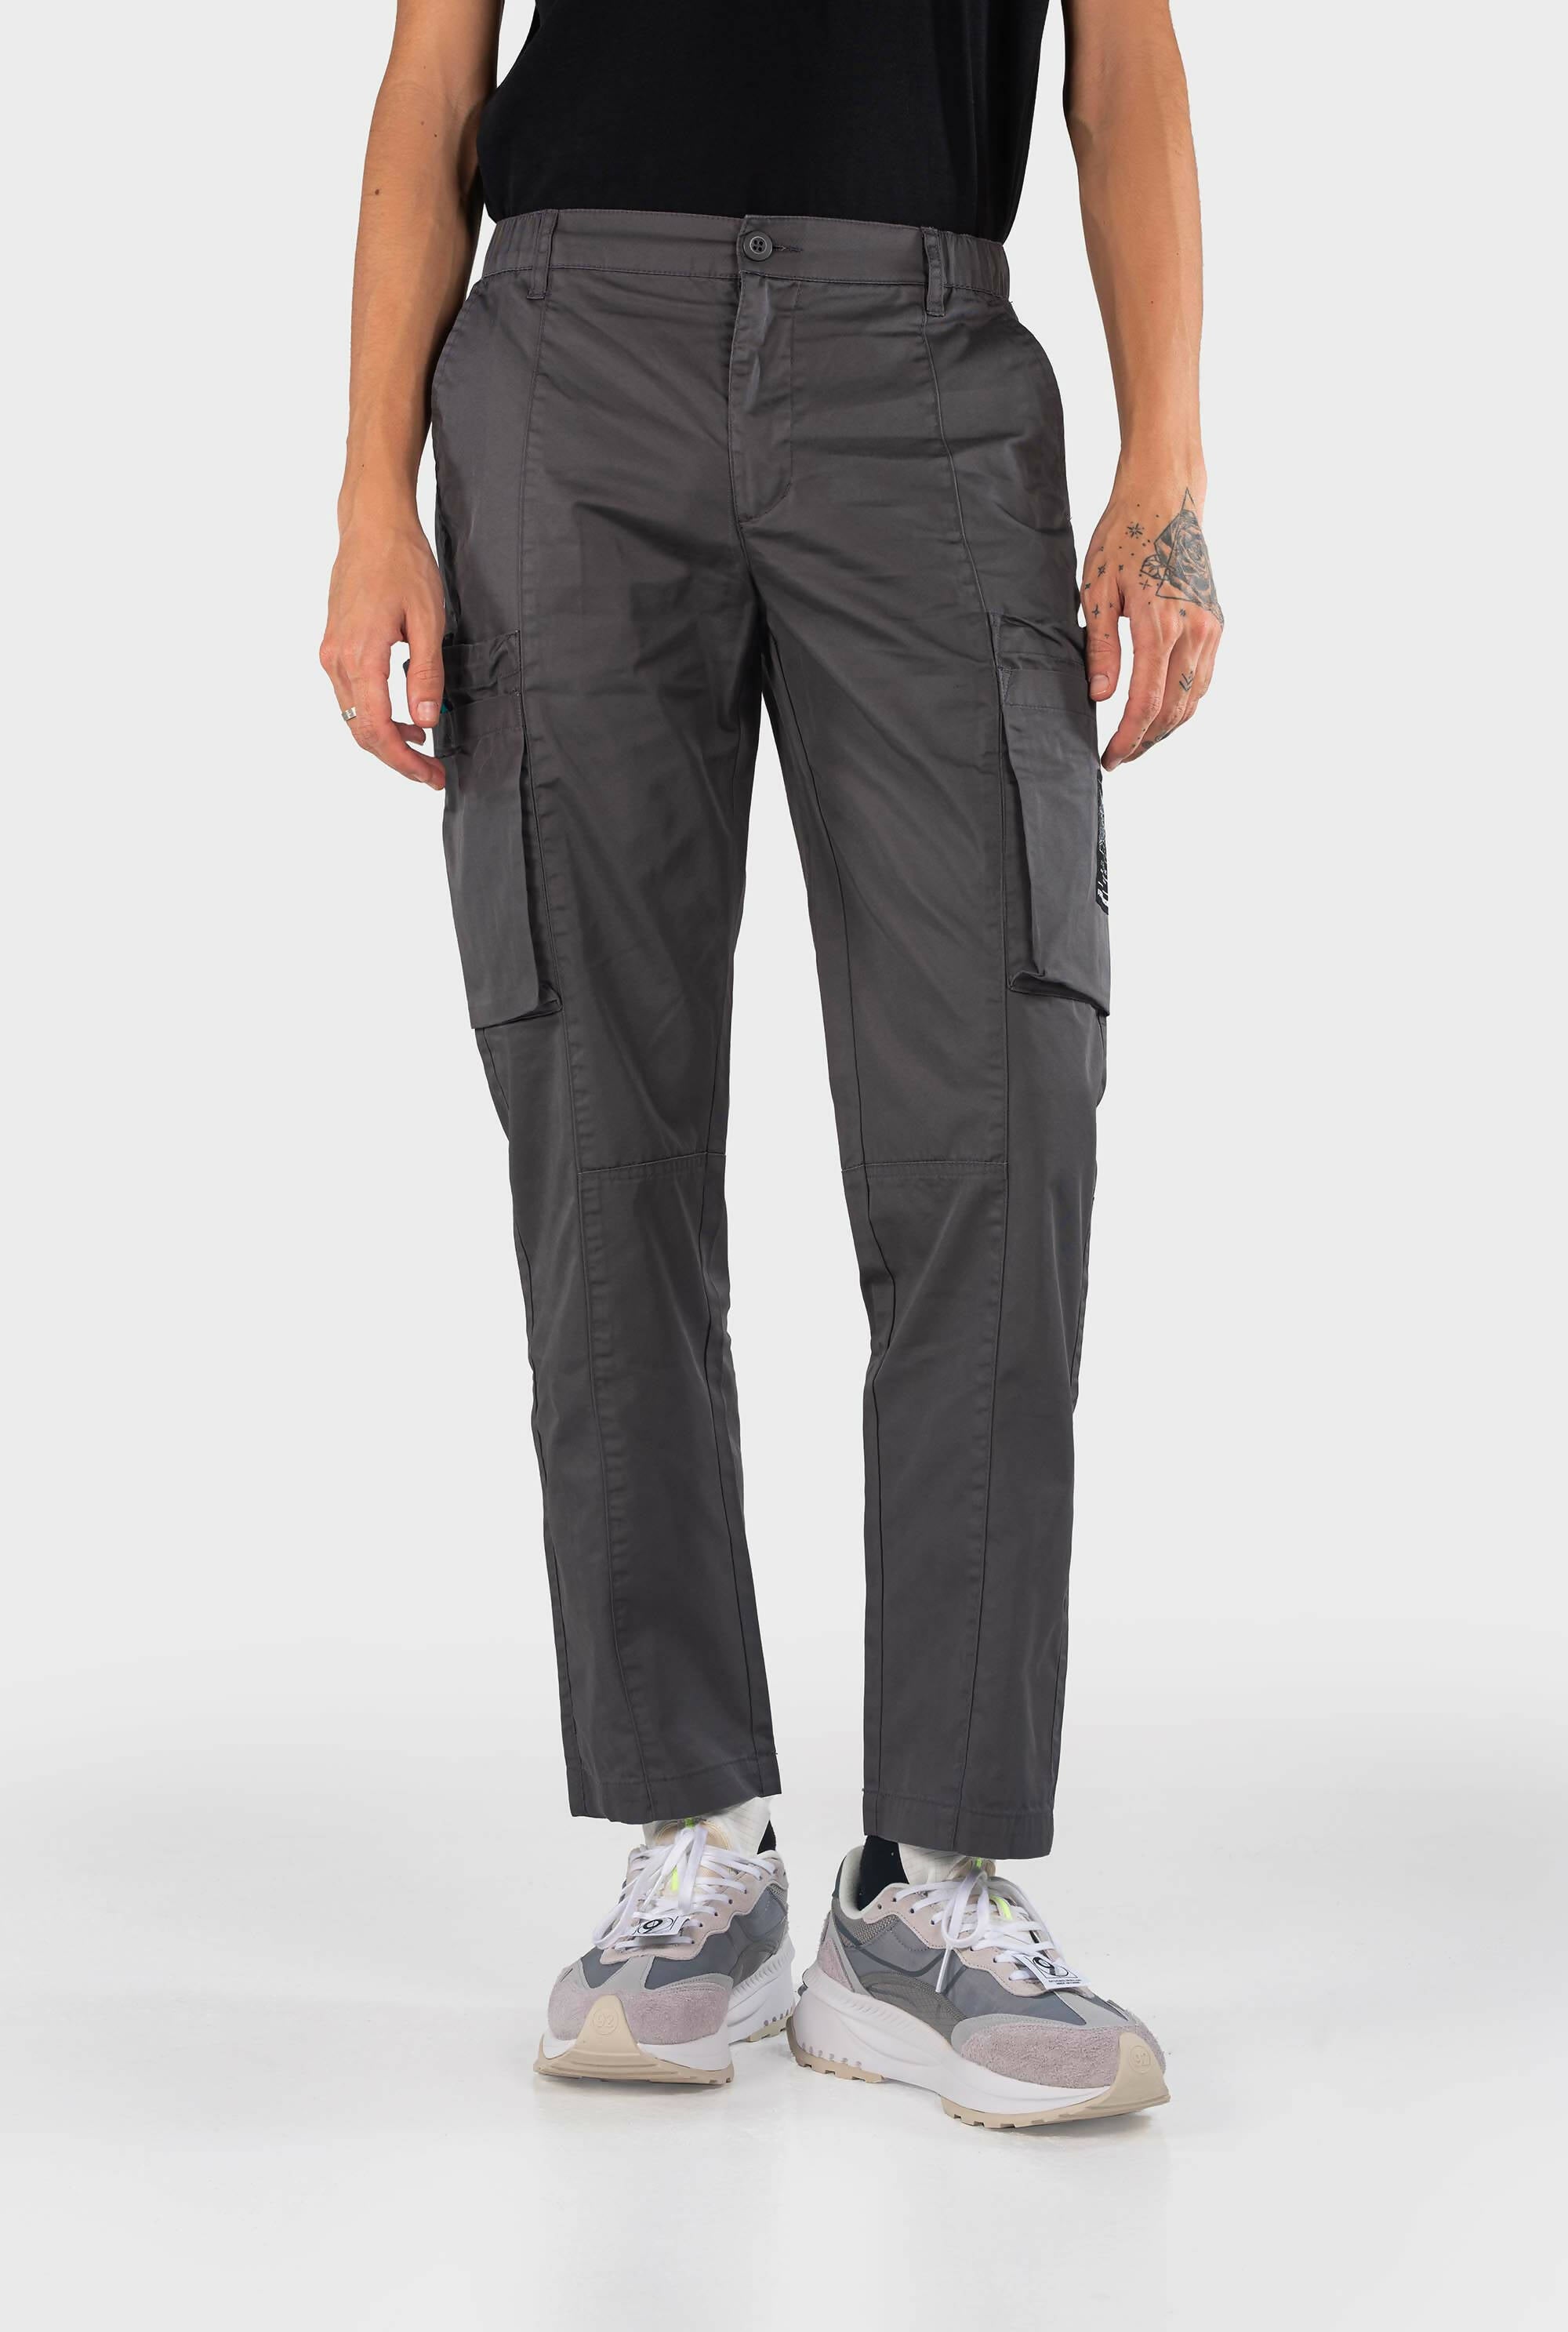 bossini Men's Mid Waist Loose Fit Regulat Woven Pants Casual Track Pants  with Pockets 2XL - Walmart.com